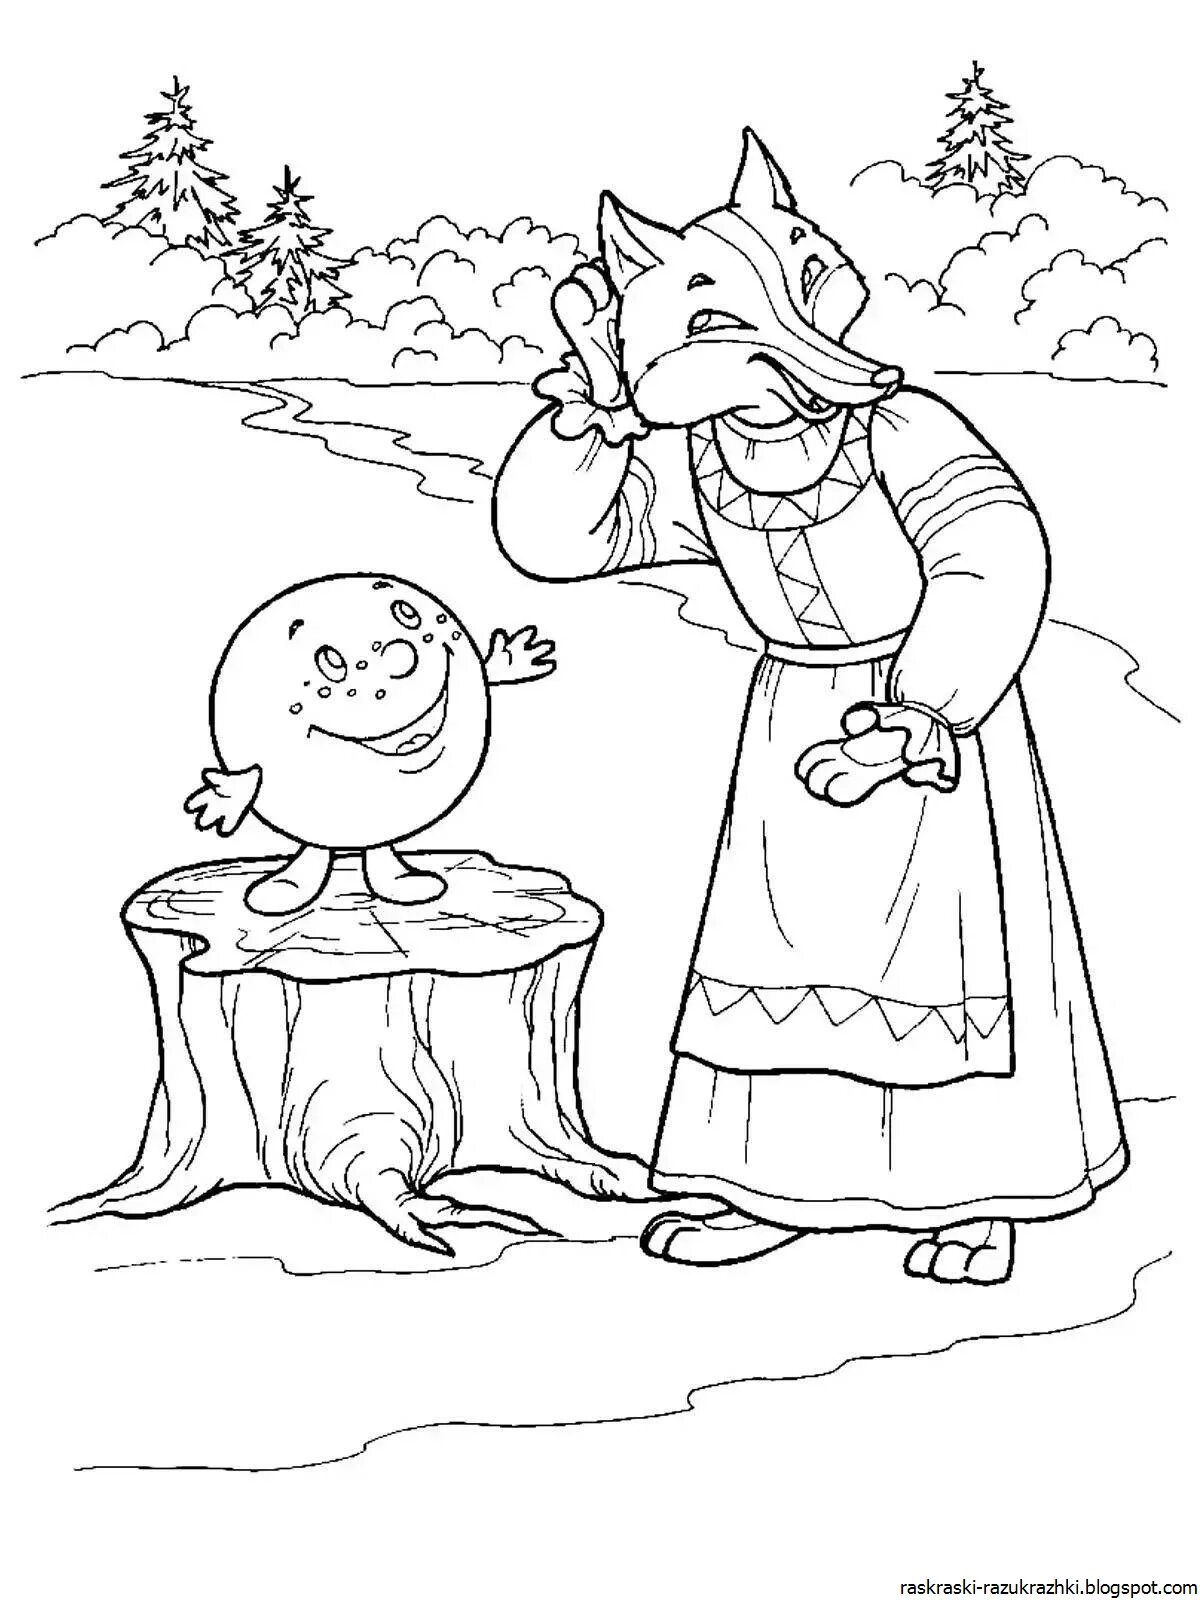 Russian folk tales for children #5